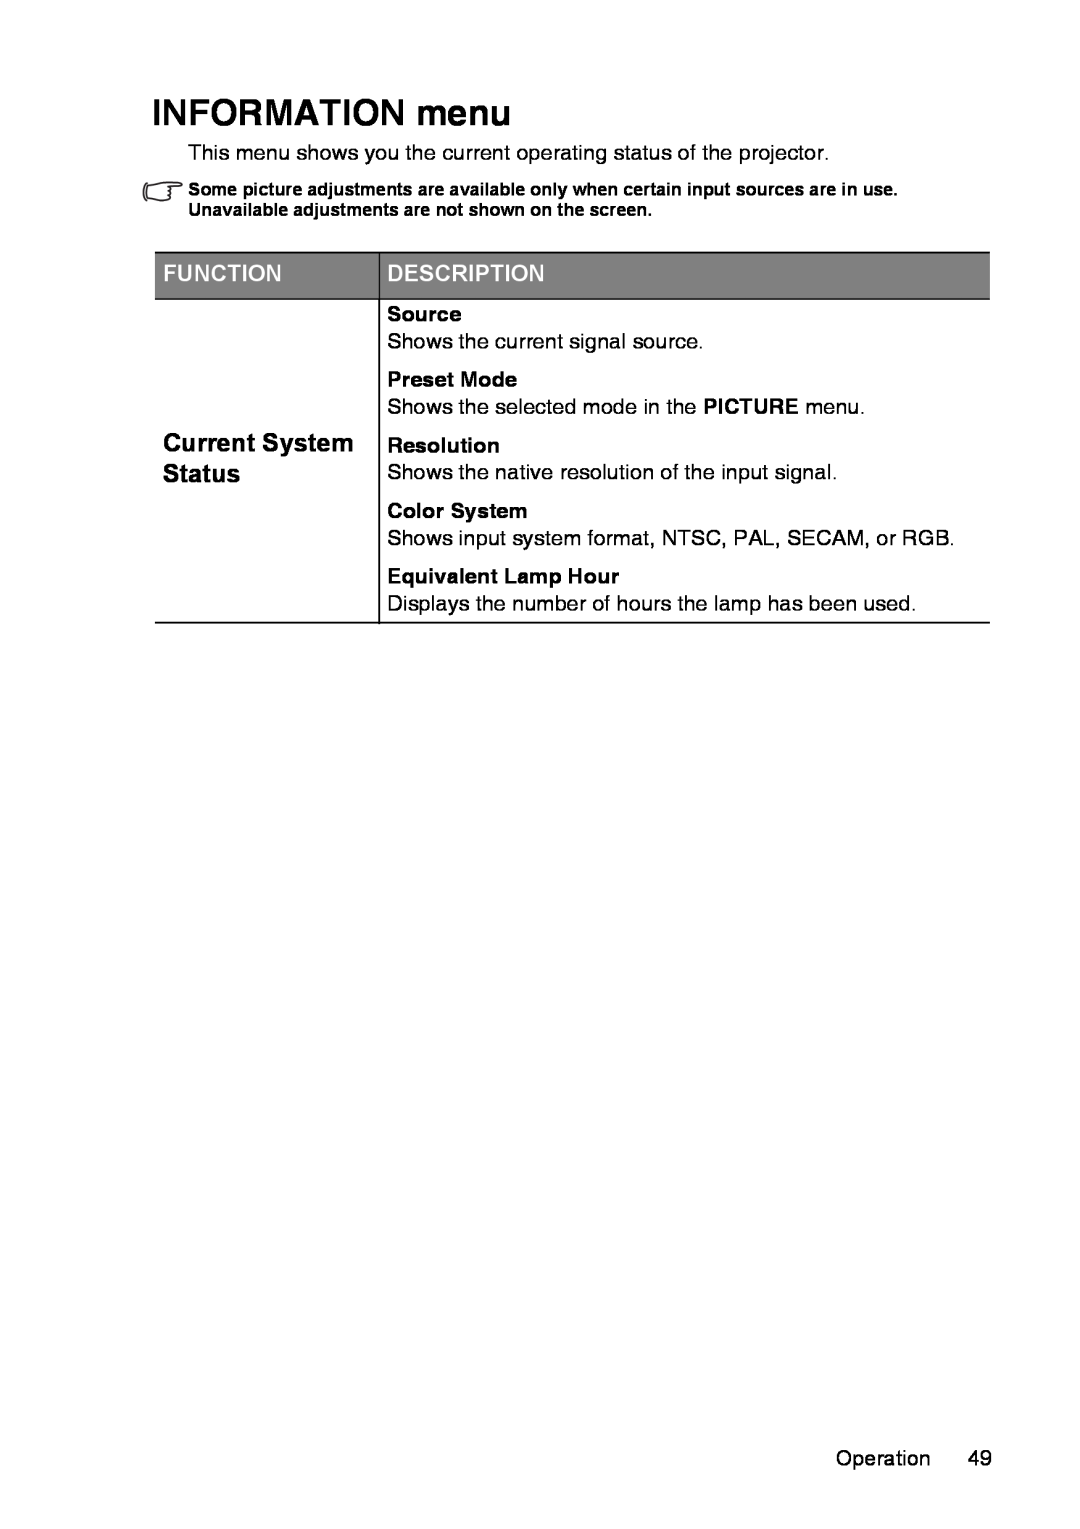 InFocus XS1 manual INFORMATION menu, Current System, Status, Function, Description 